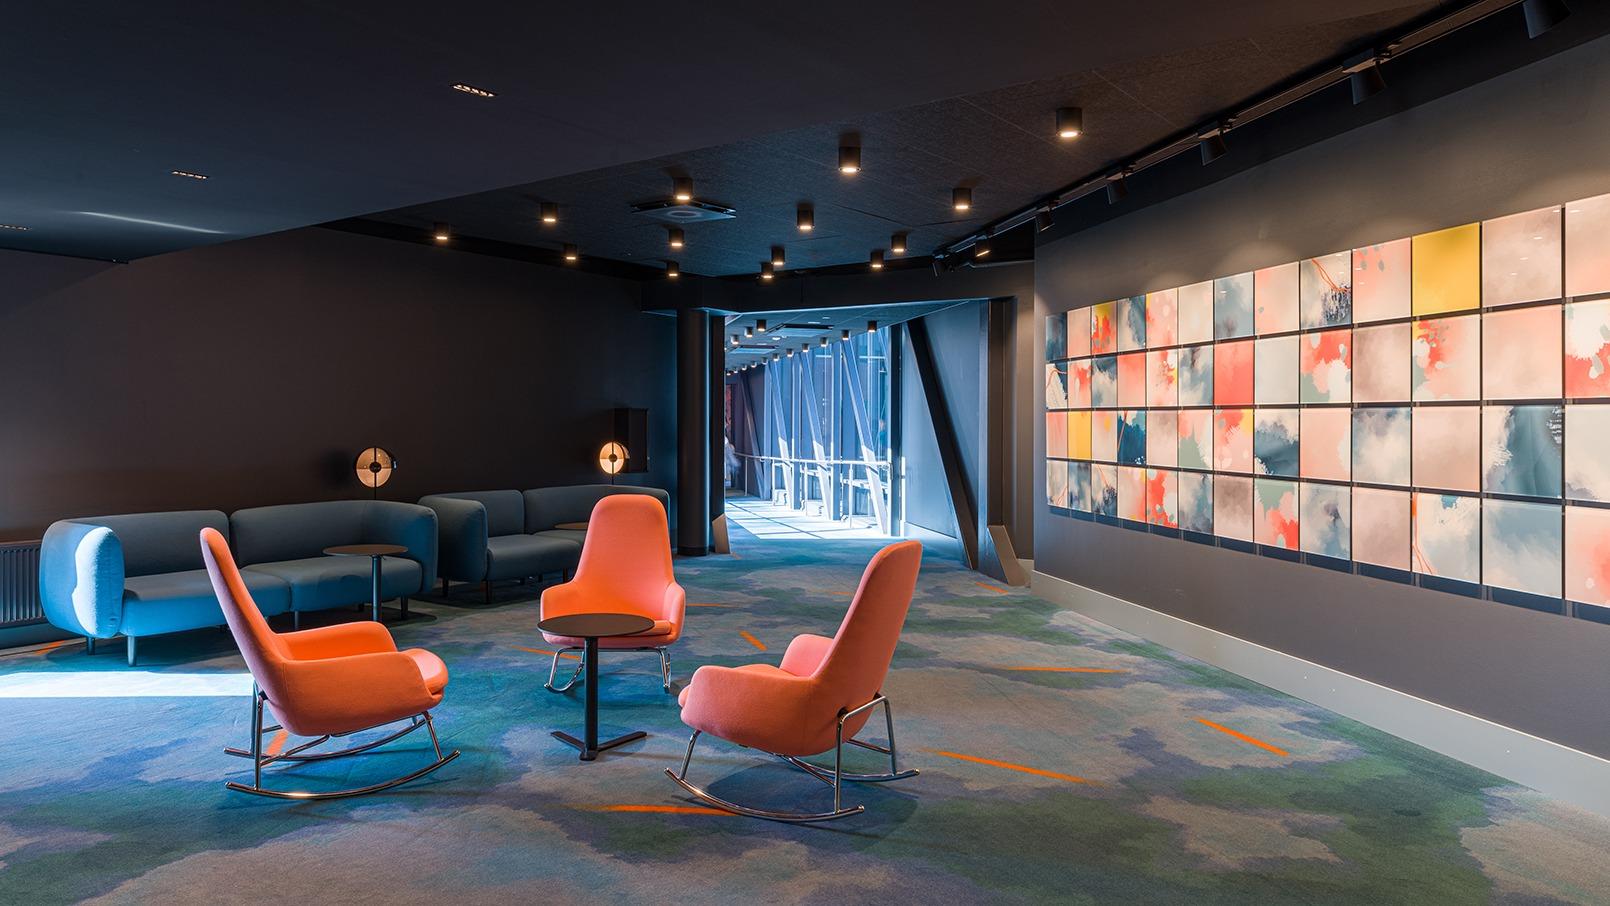 Rune & Berg Designin suunnittelema lounge-tila Sokos Hotelli Flamingon huonekerrokseen